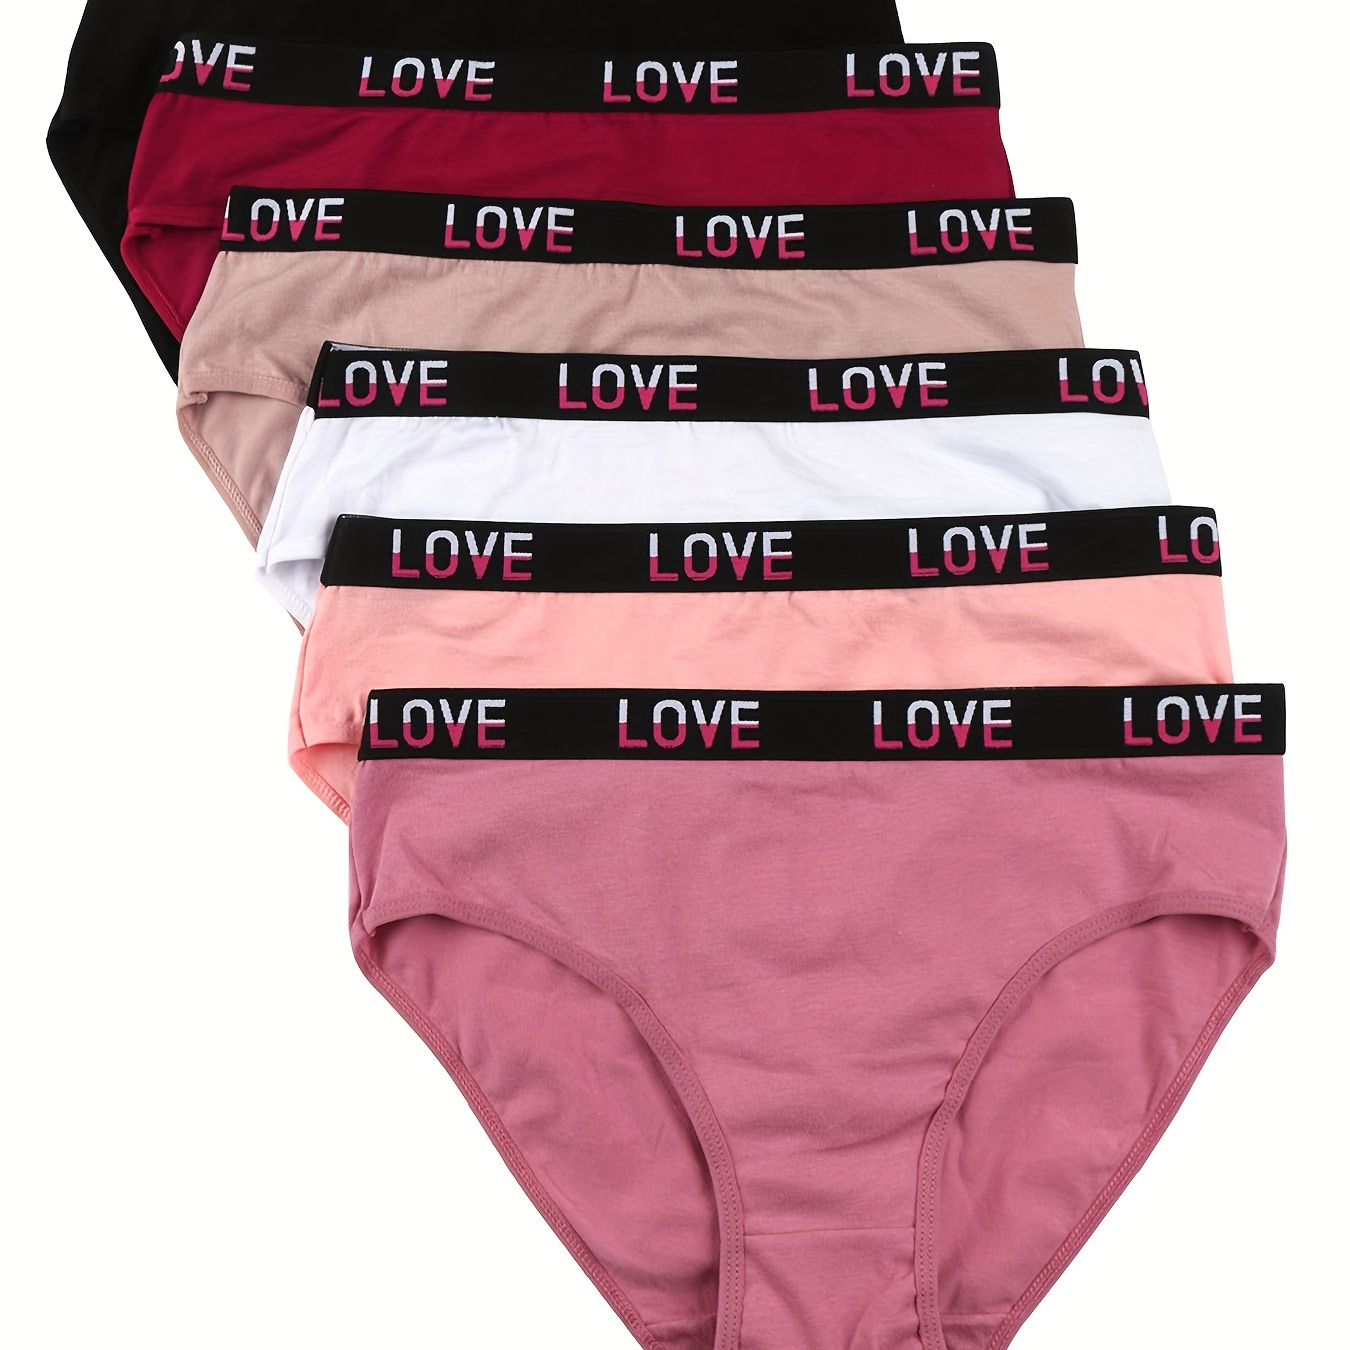 

6pcs Letter Tape Briefs, Comfy & Breathable Stretchy Intimates Panties, Women's Lingerie & Underwear